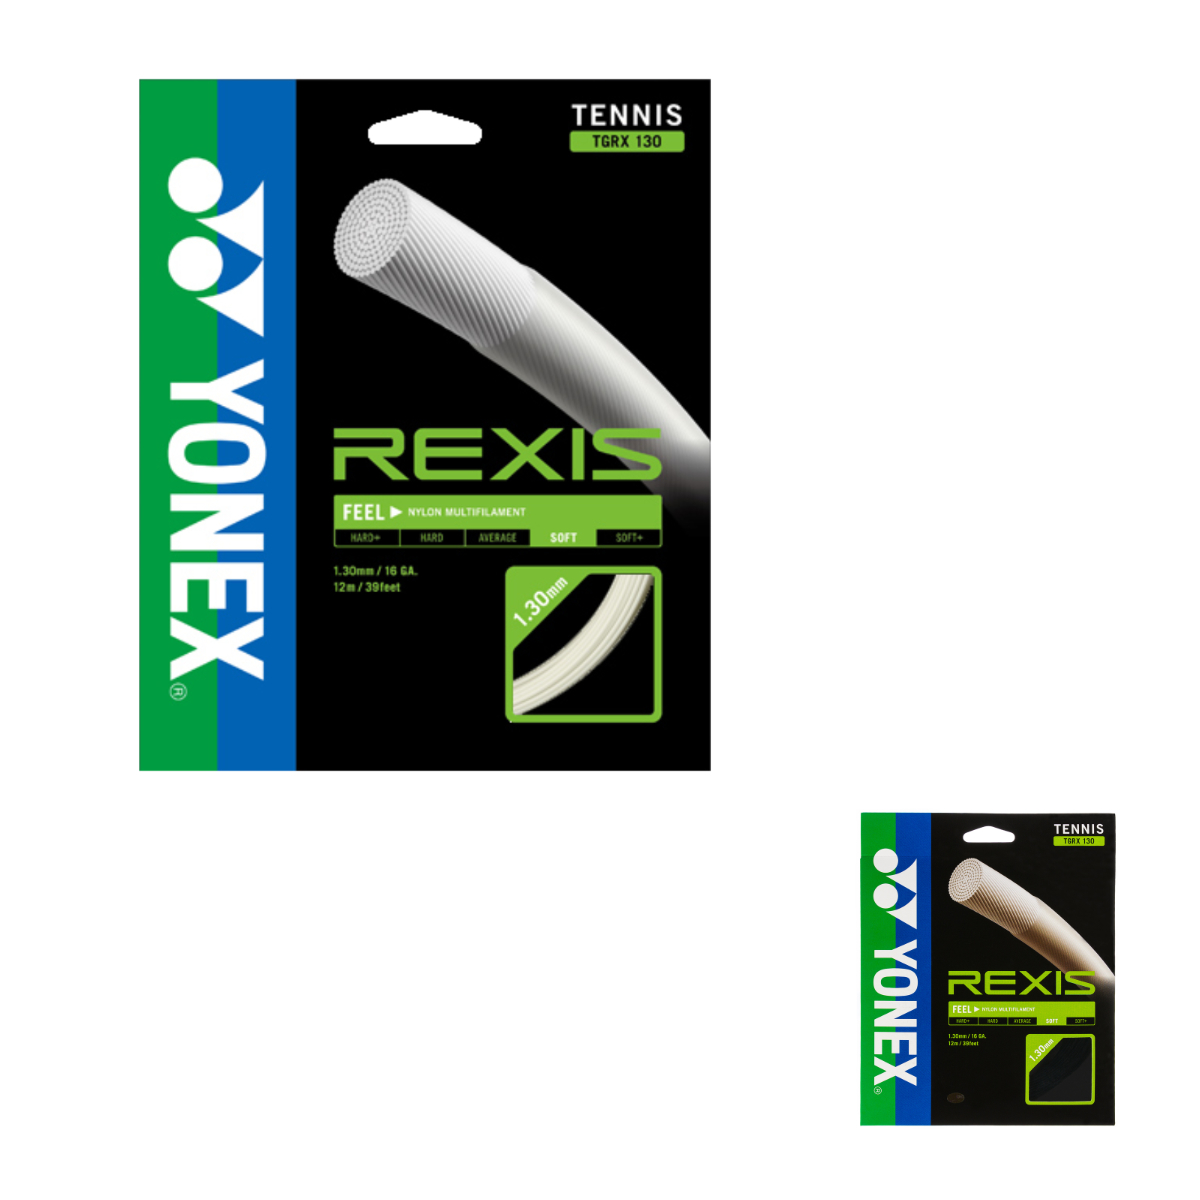 REXIS 130 Set - Badminton Shop Franken